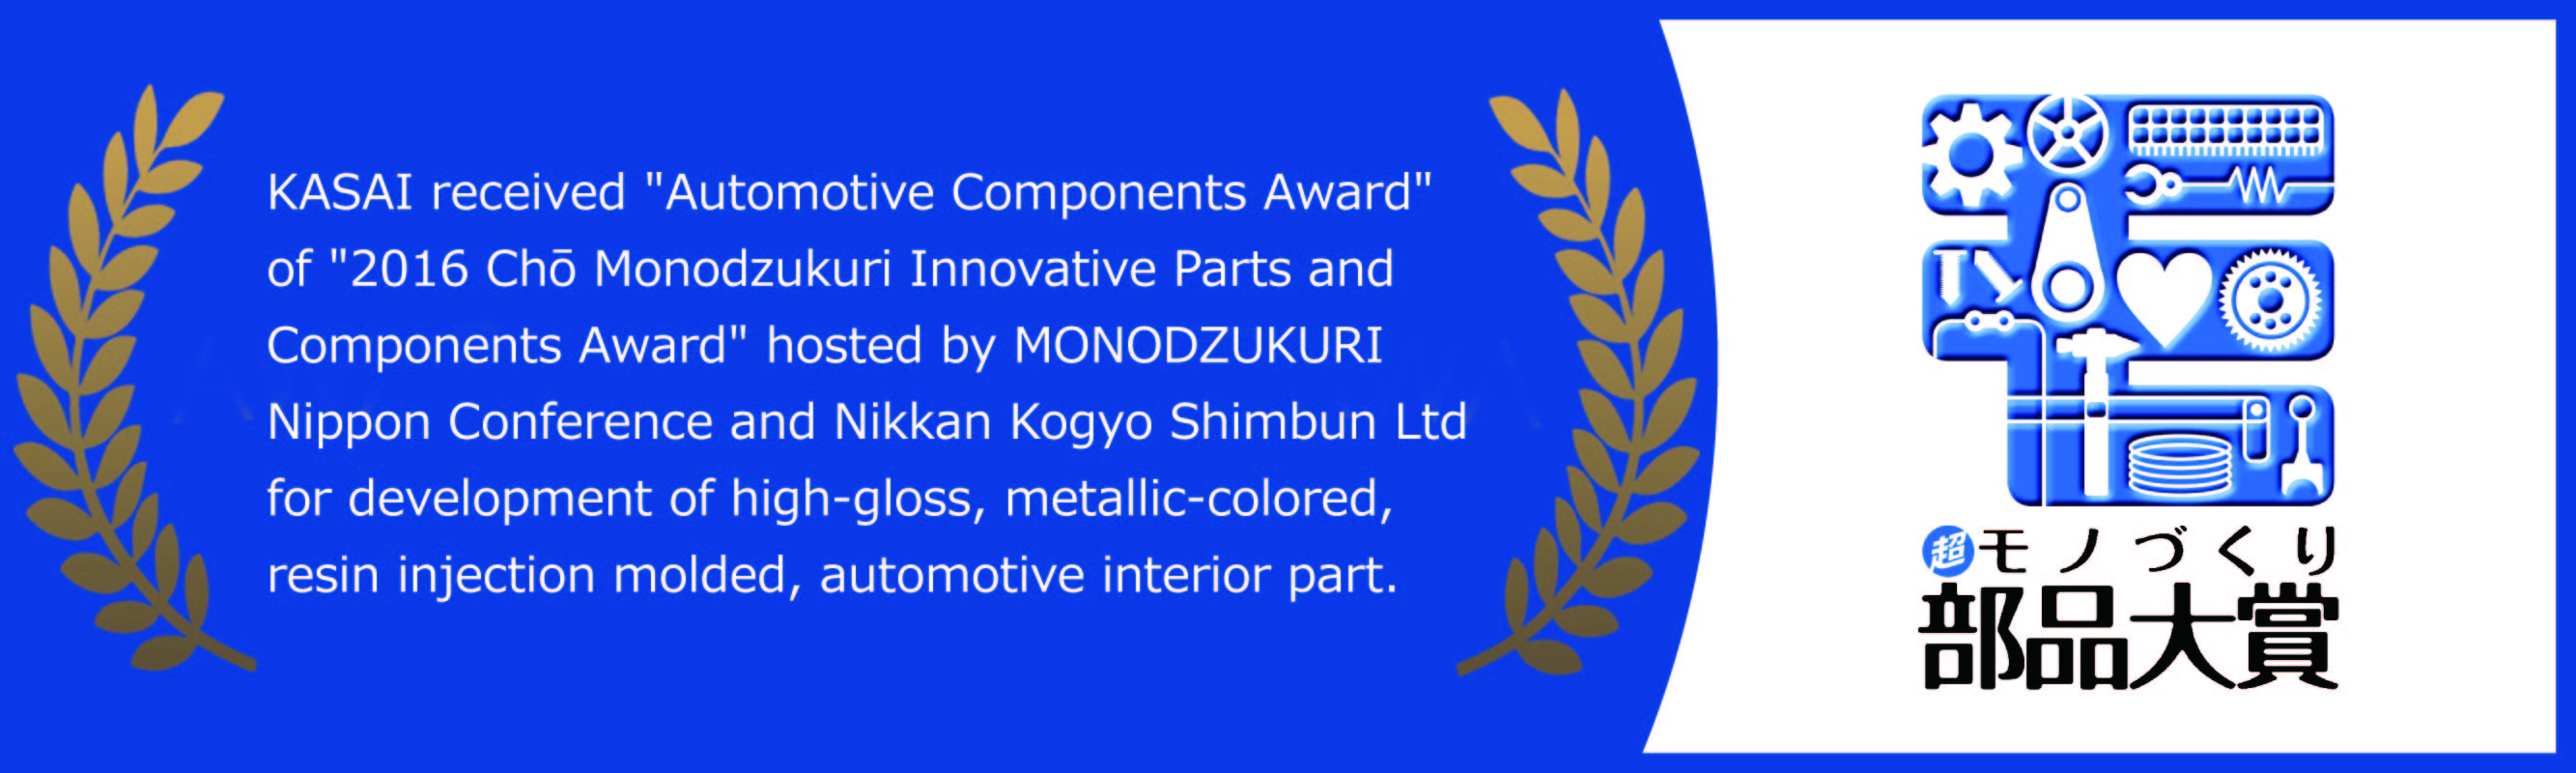 KASAI received 'Automotive Components Award' of '2016 Chō Monodzukuri Innovative Parts and Components Award' hosted by MONODZUKURI Nippon Conference and Nikkan Kogyo Shimbun Ltd for development of high-gloss, metallic-colored, resin injection molded, automotive interior part.